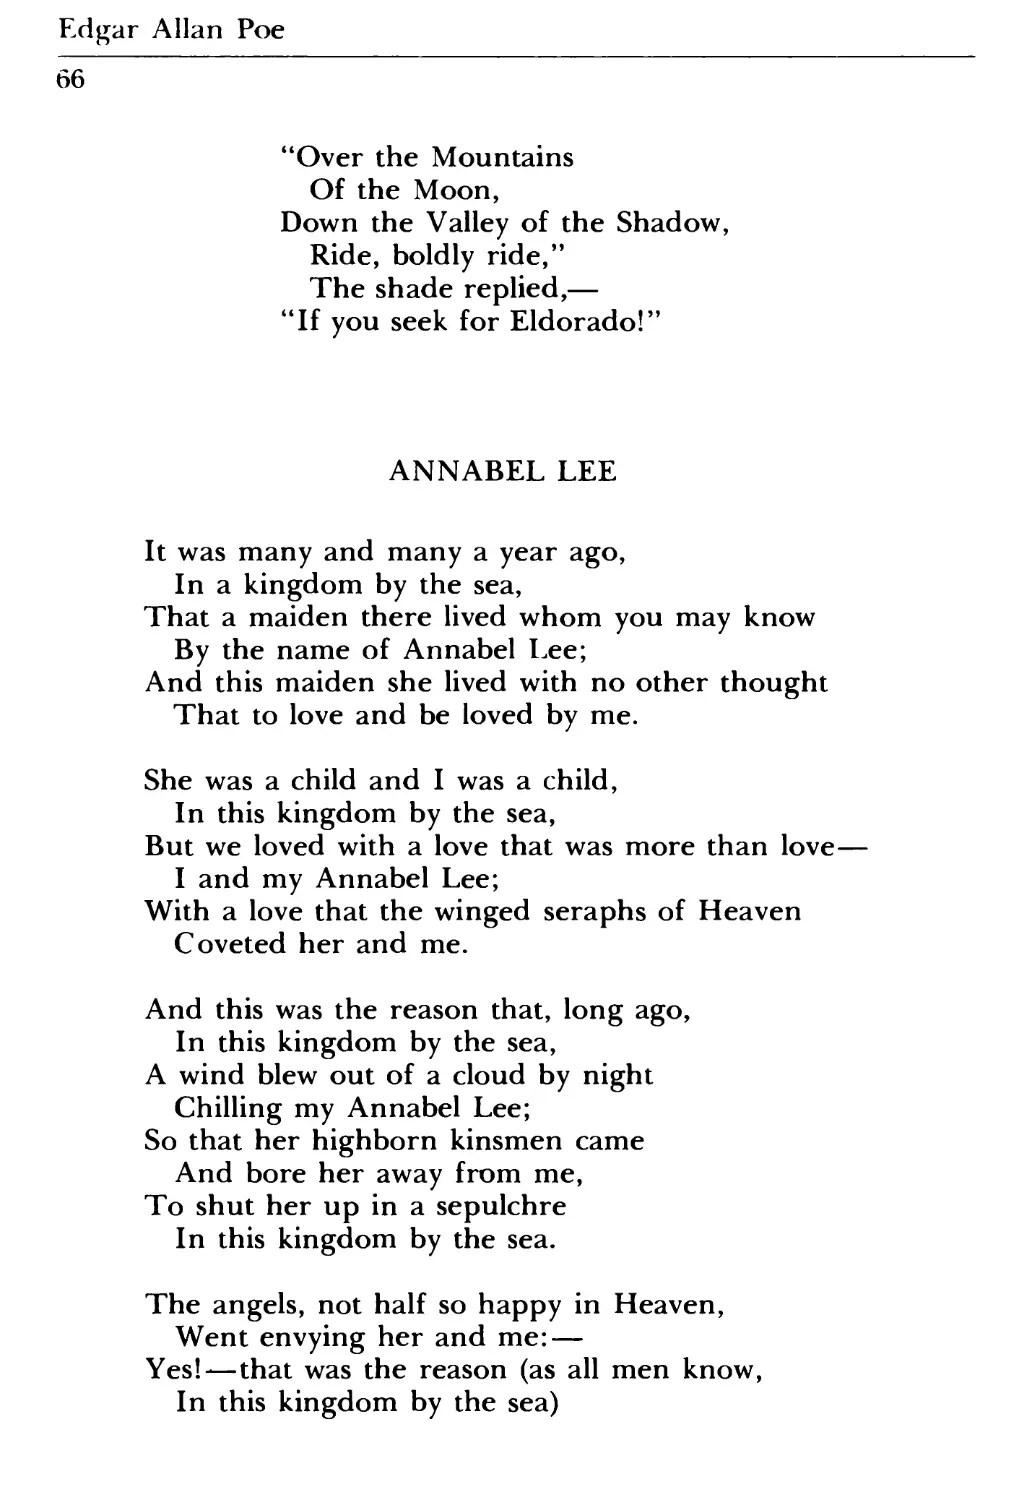 Annabel Lee 66